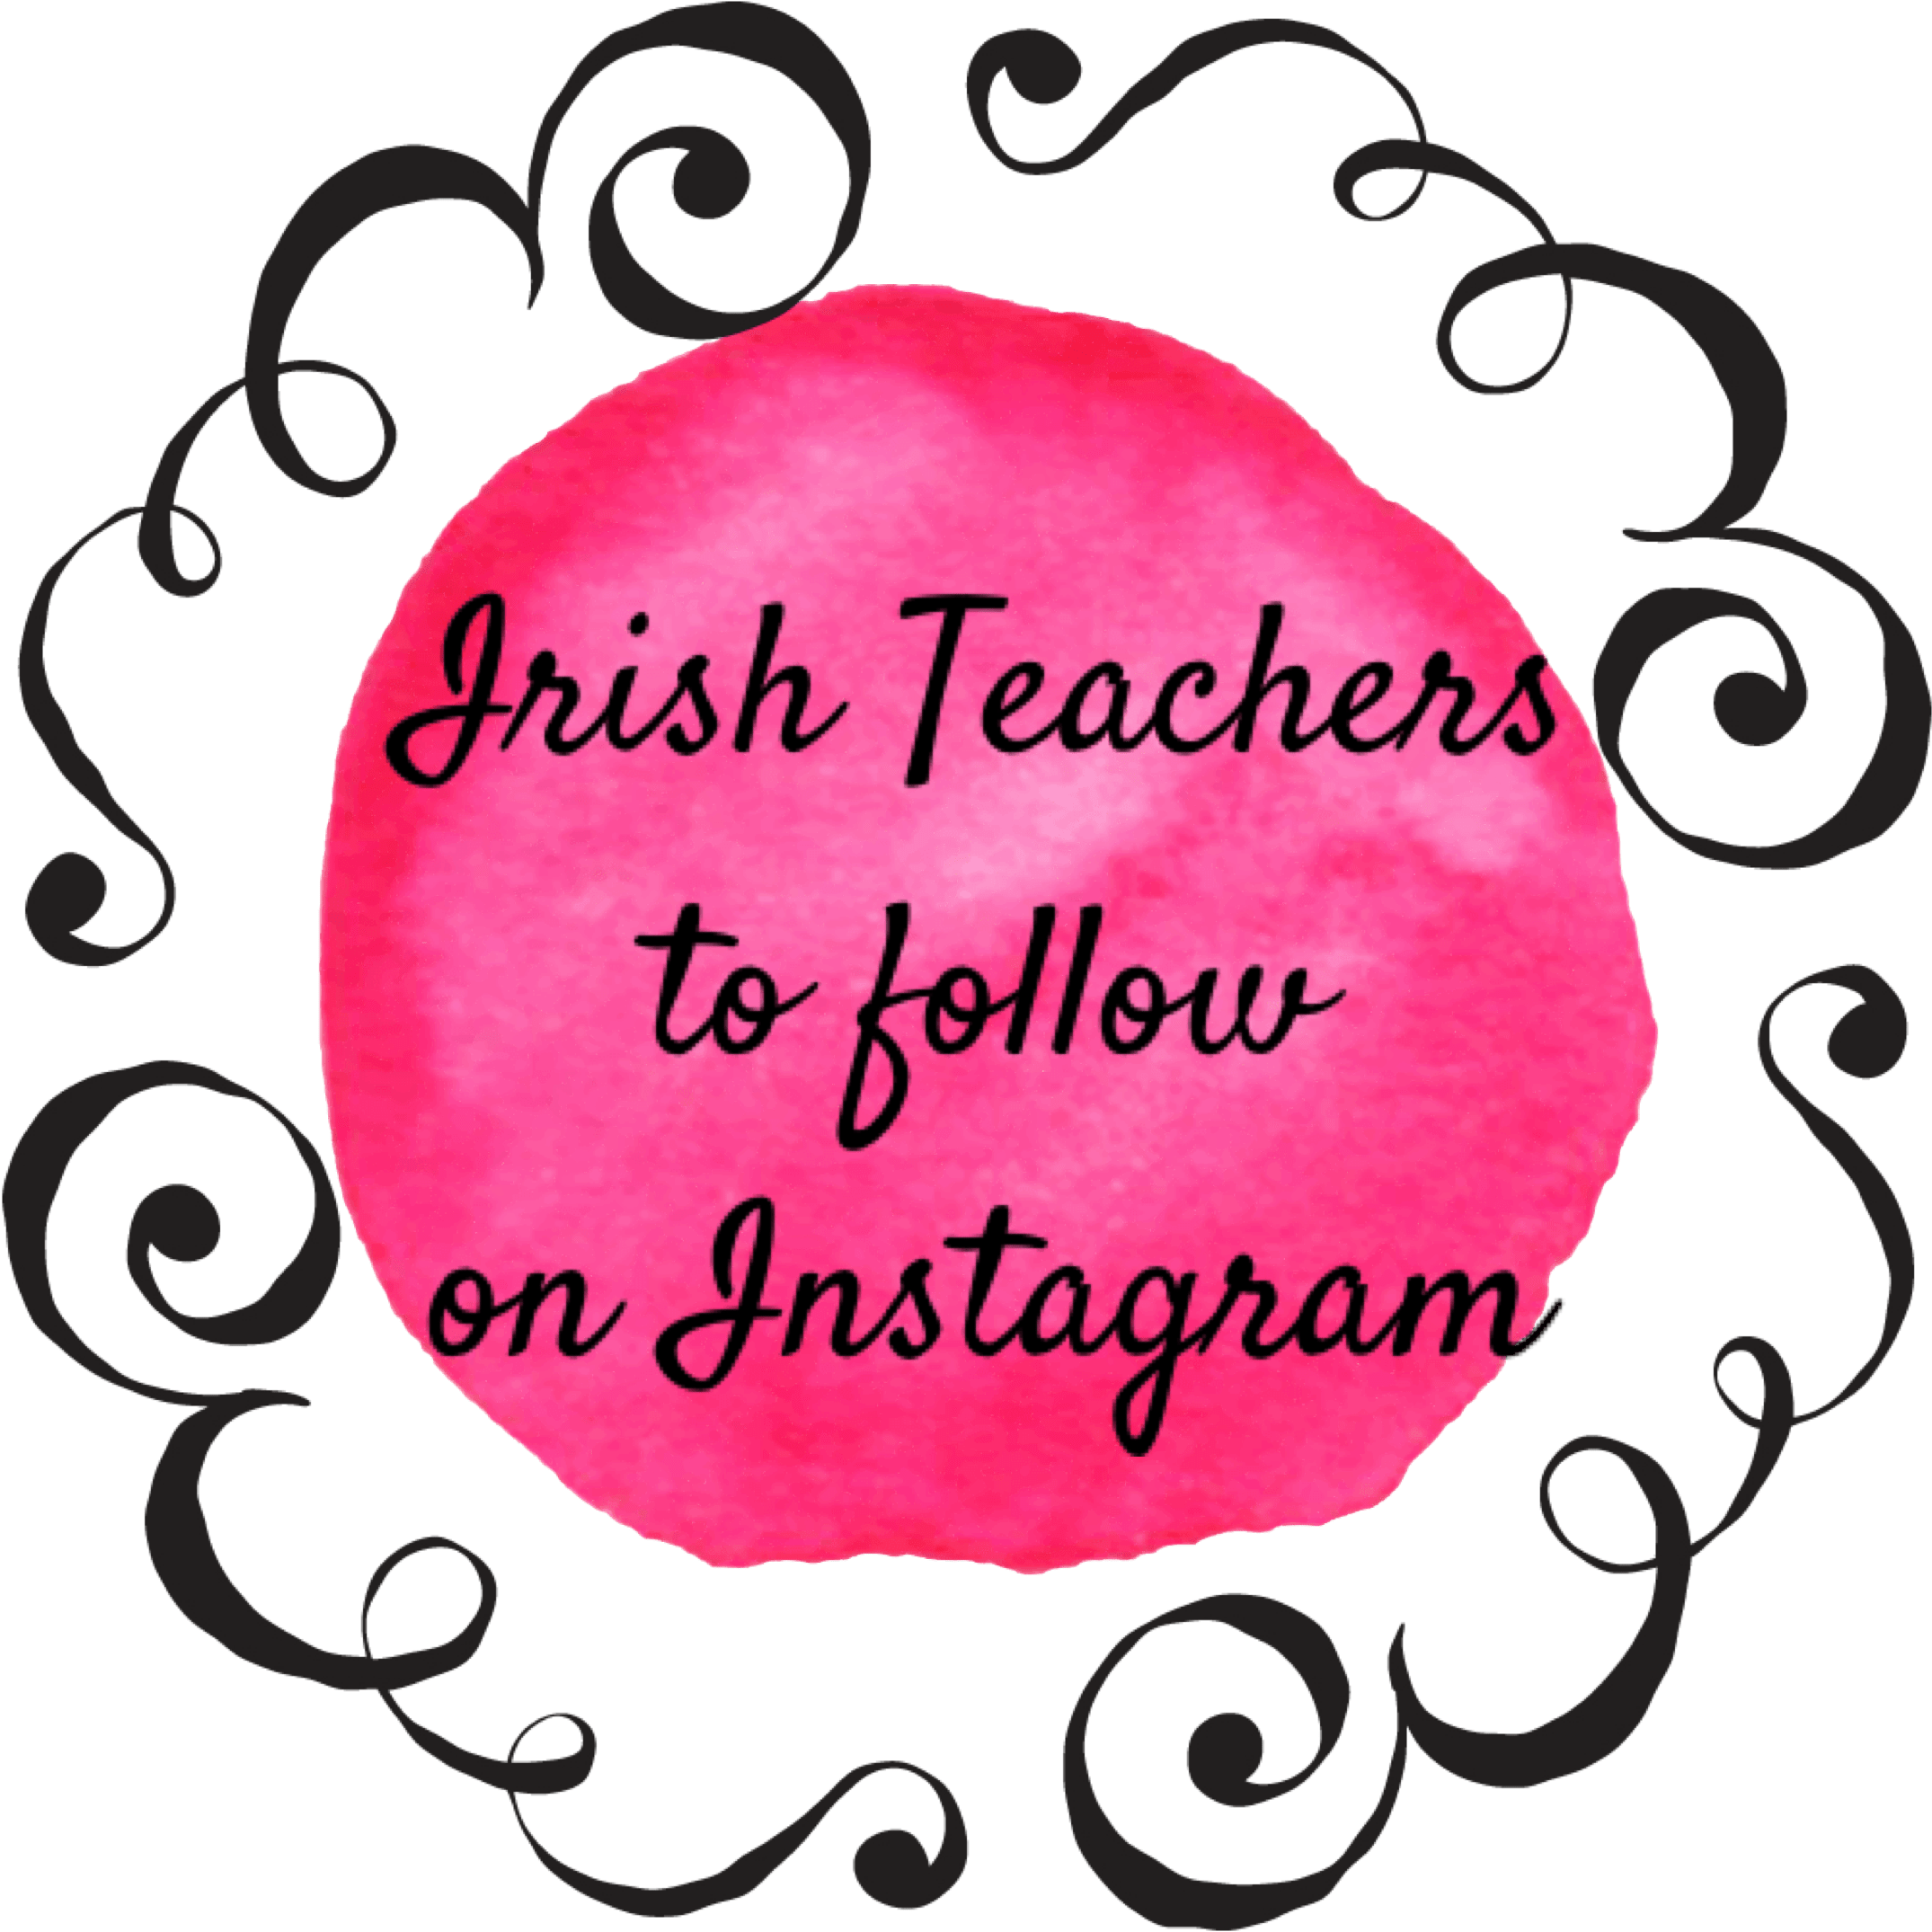 Irish Primary Teachers On Instagram 2018/2019 - Circle (3000x3000), Png Download